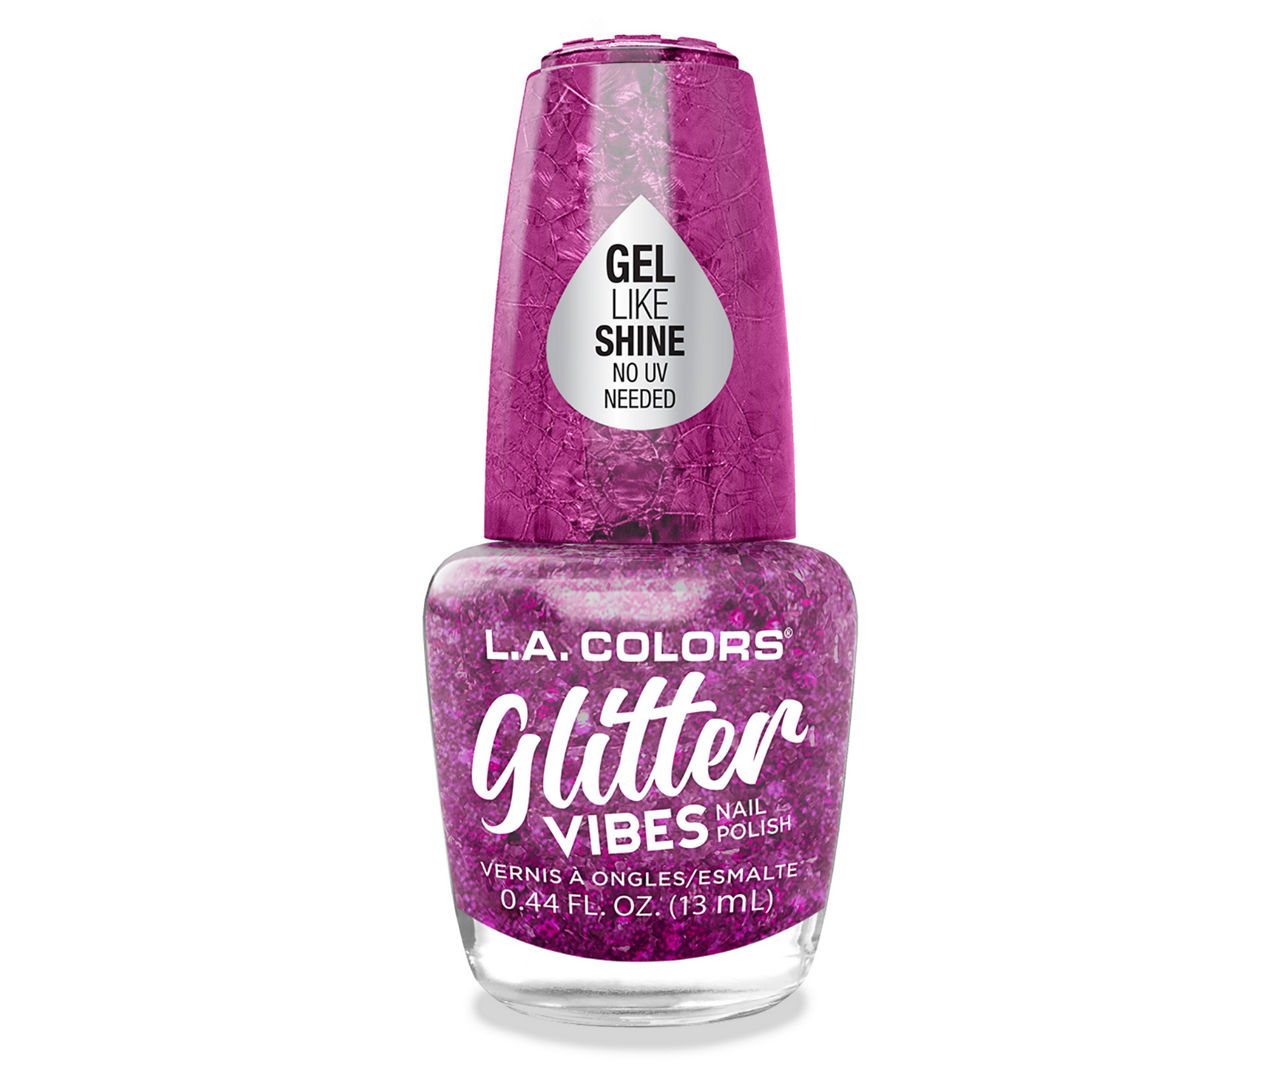 Glitter Vibes Nail Polish in City Girl, 0.44 Oz.